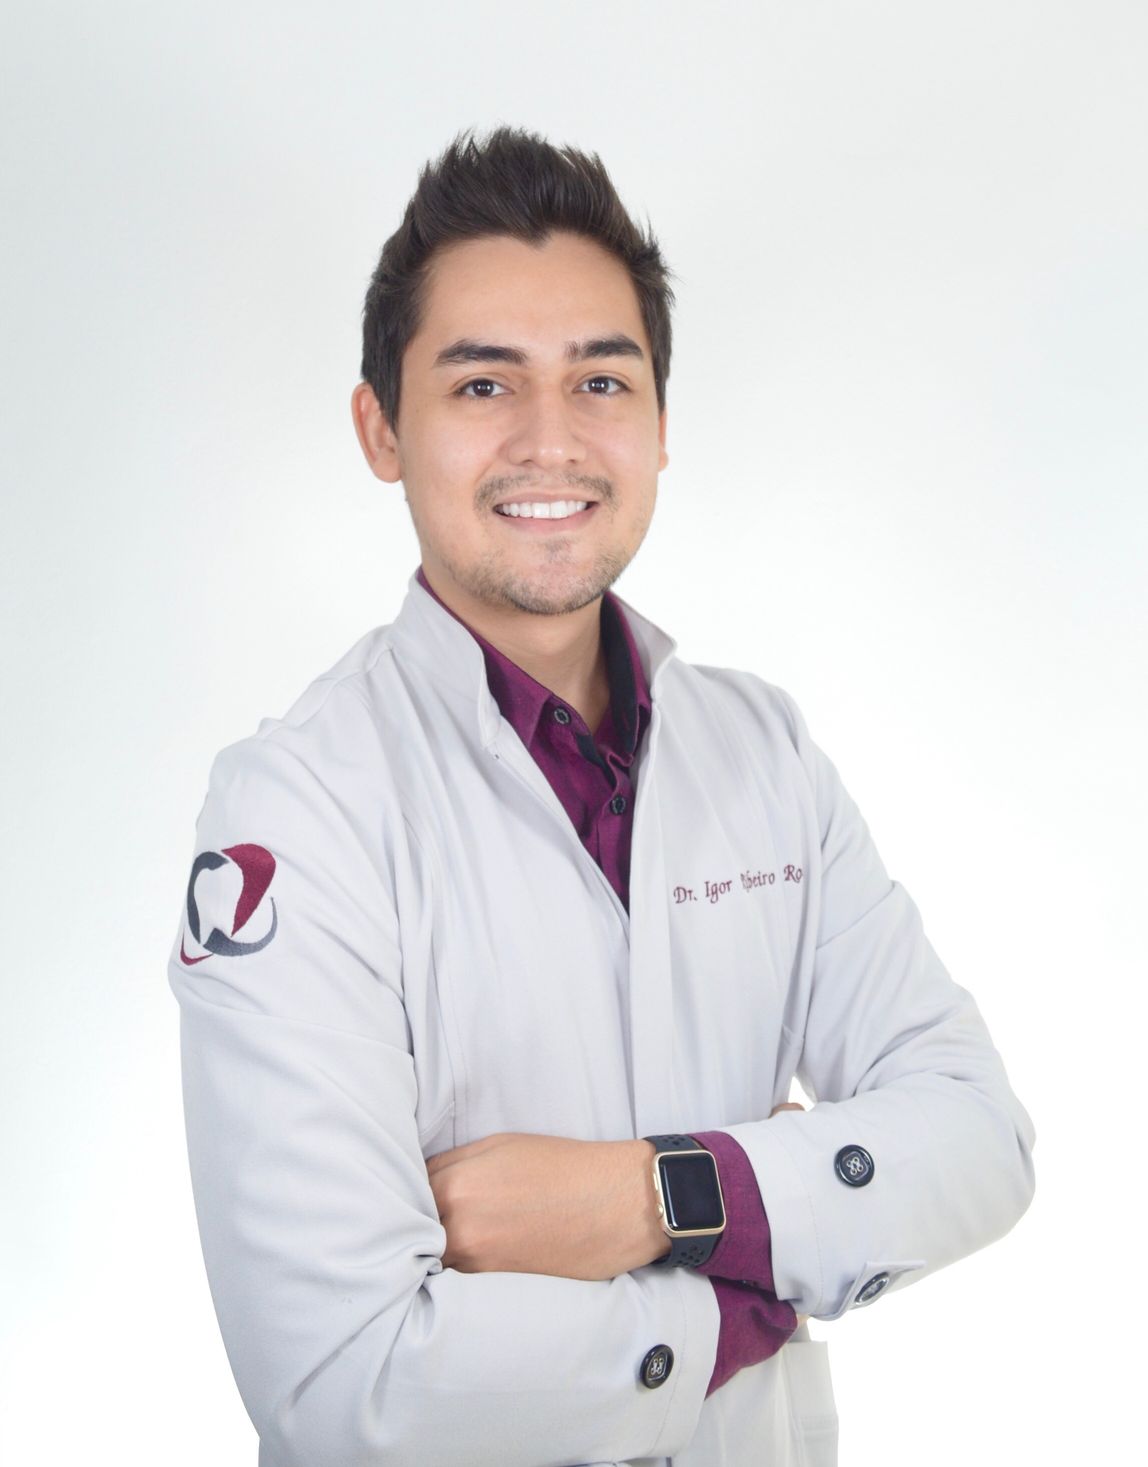 Dr. Igor Ribeiro cirurgião Dentista na cidade de Fortaleza CE, realiza procedimentos de odontologia estética como  Lentes de Contato Dental, Clareamento, Lipo de Papada, Gengivoplastia